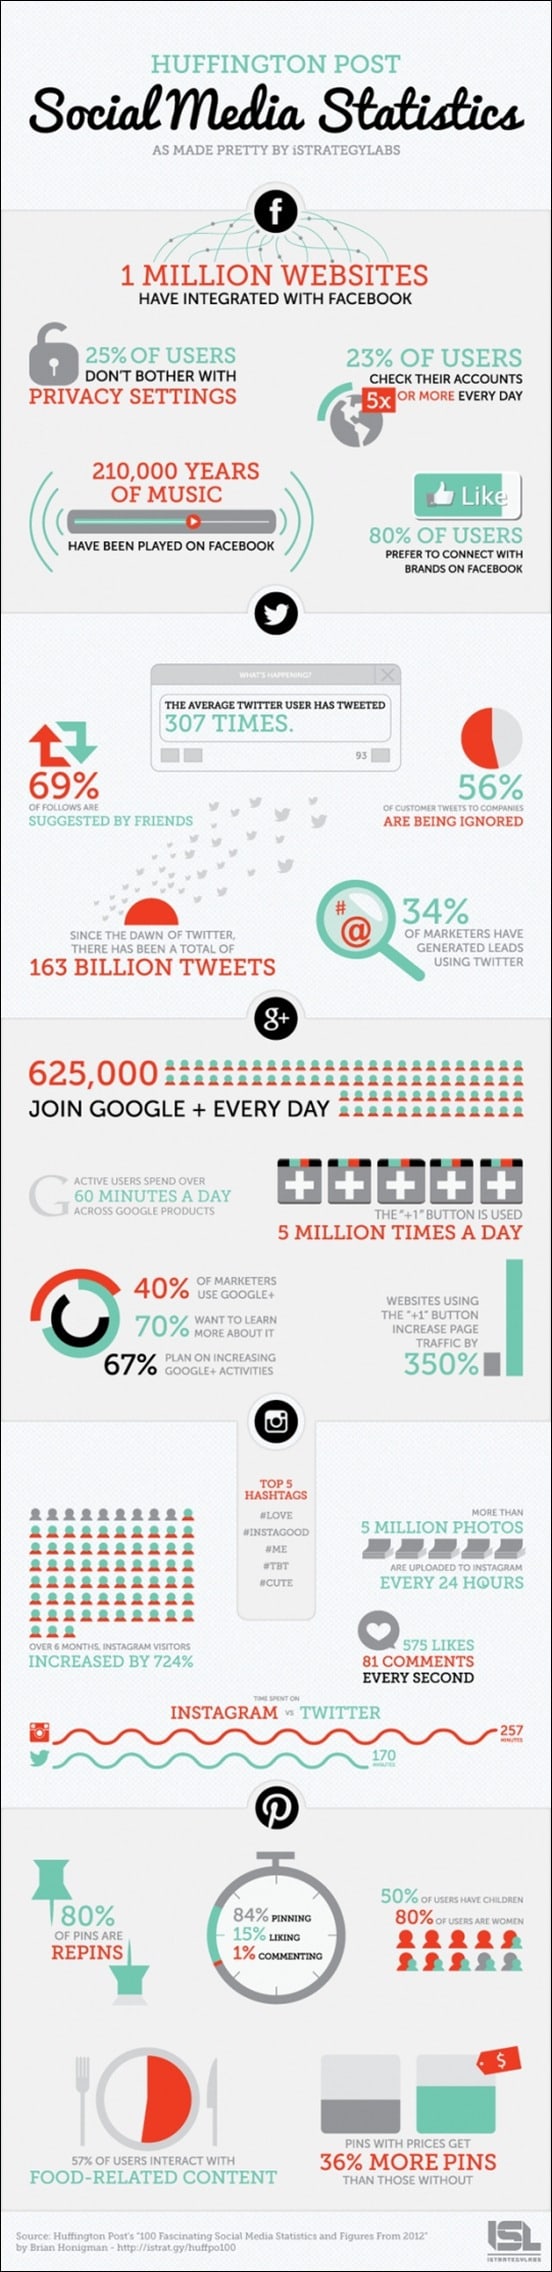 infographic-social-media-statistics-for-2013